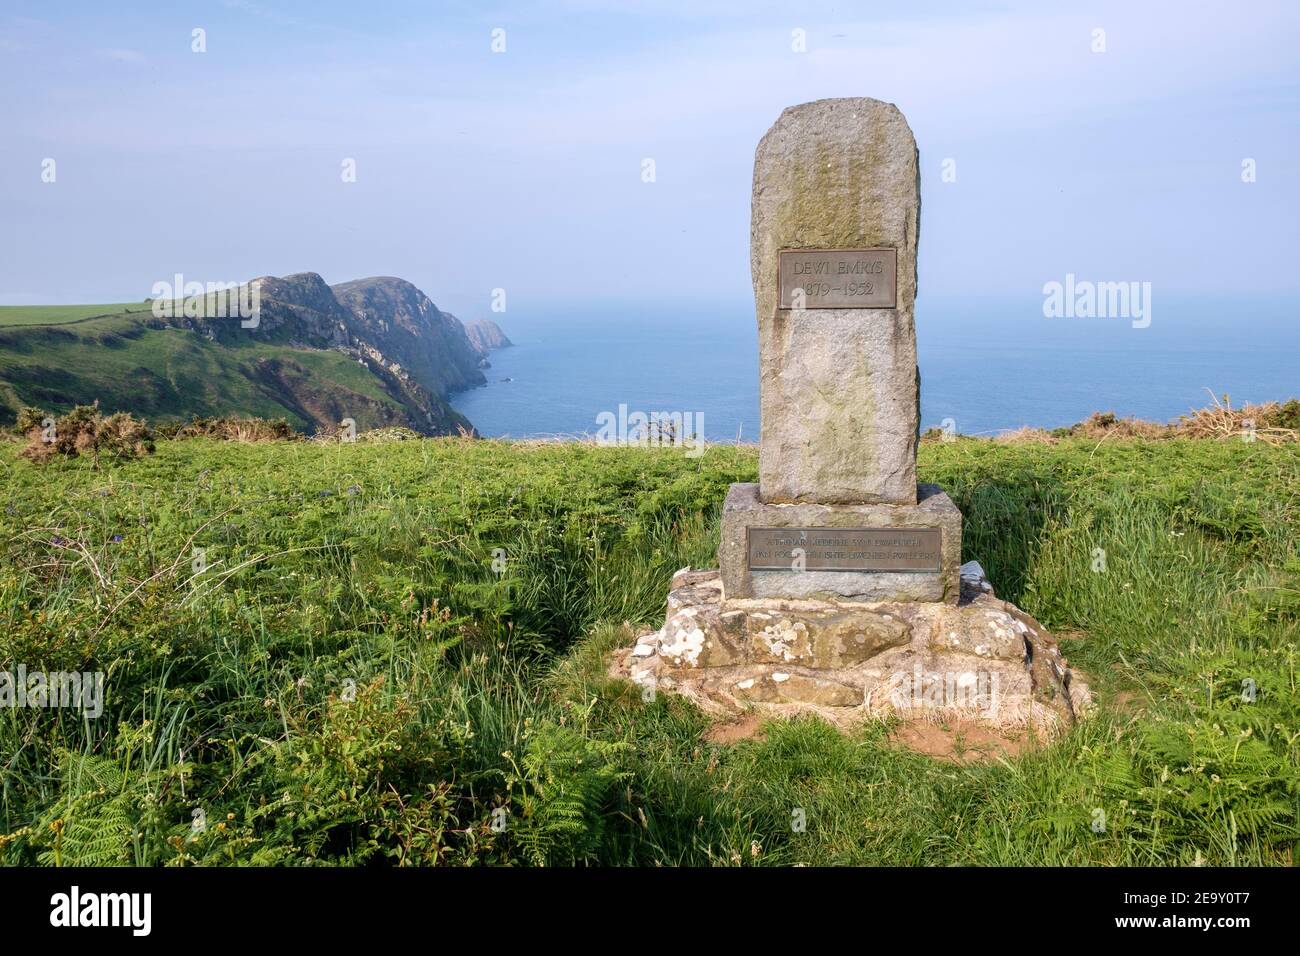 Dewi Emrys Memorial on the Pembrokeshire Coastal Path, Pembrokeshire, Wales, GB, UK Stock Photo